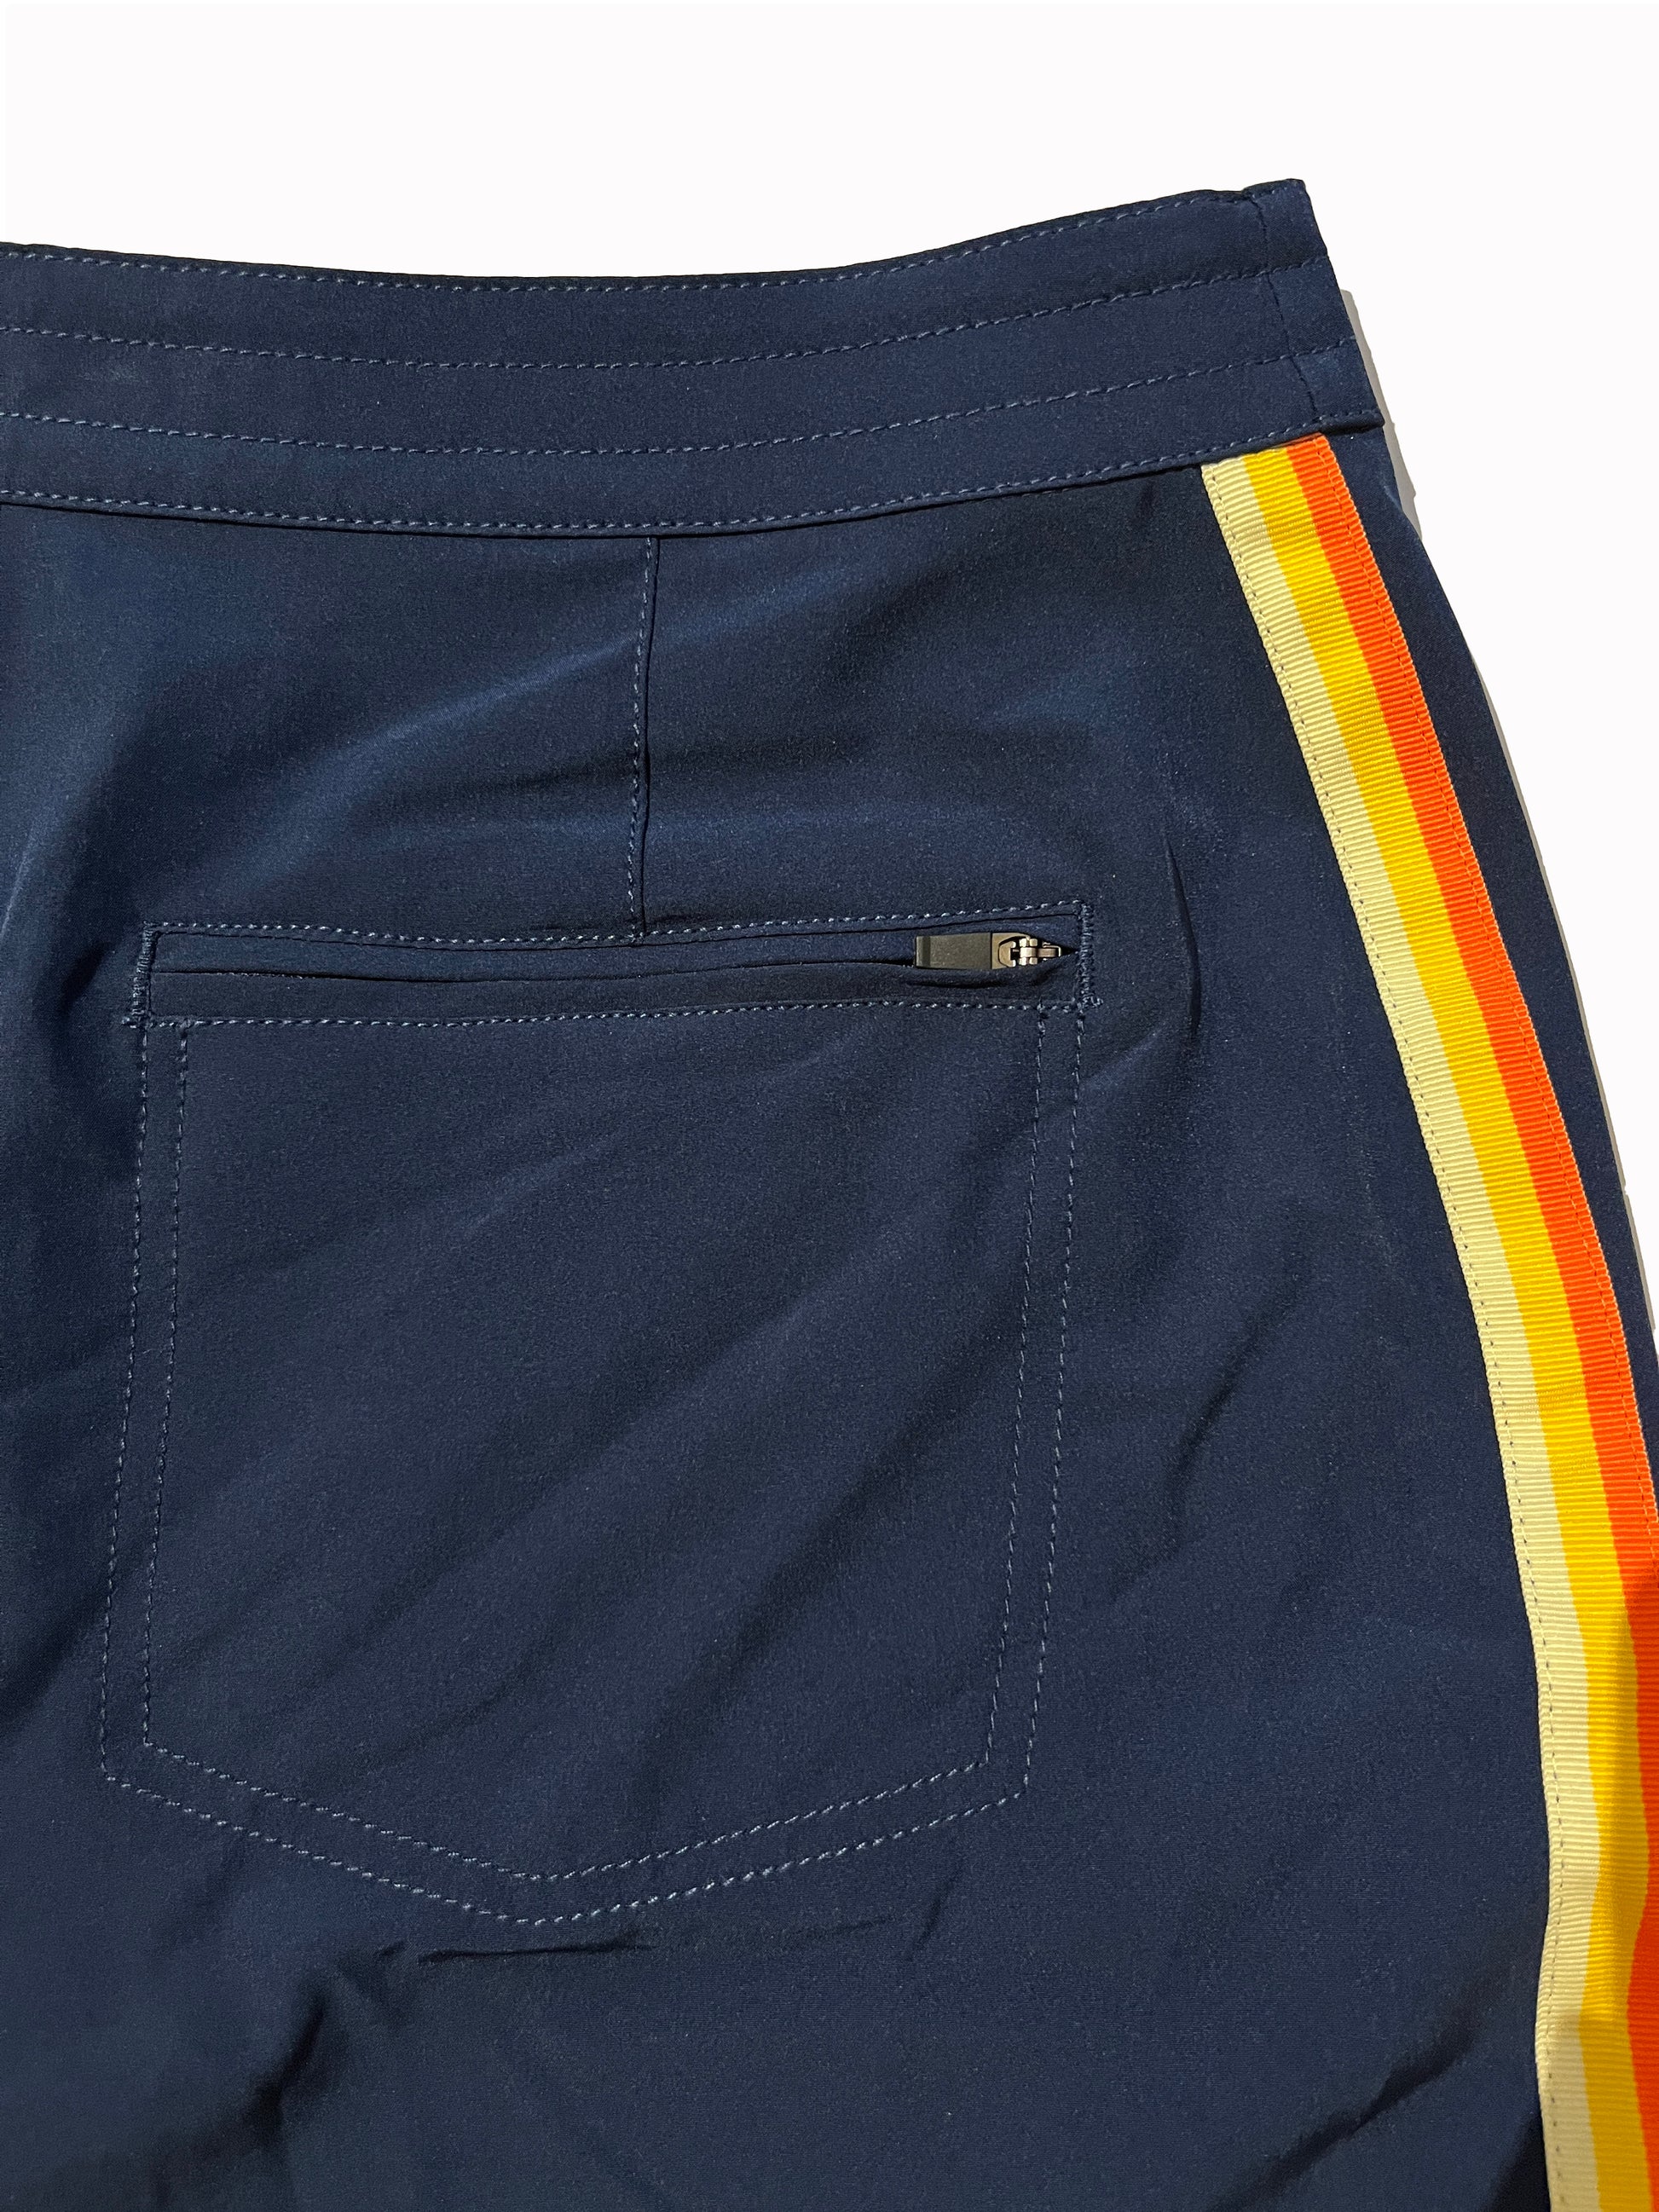 Closeup detail of back zip pocket 